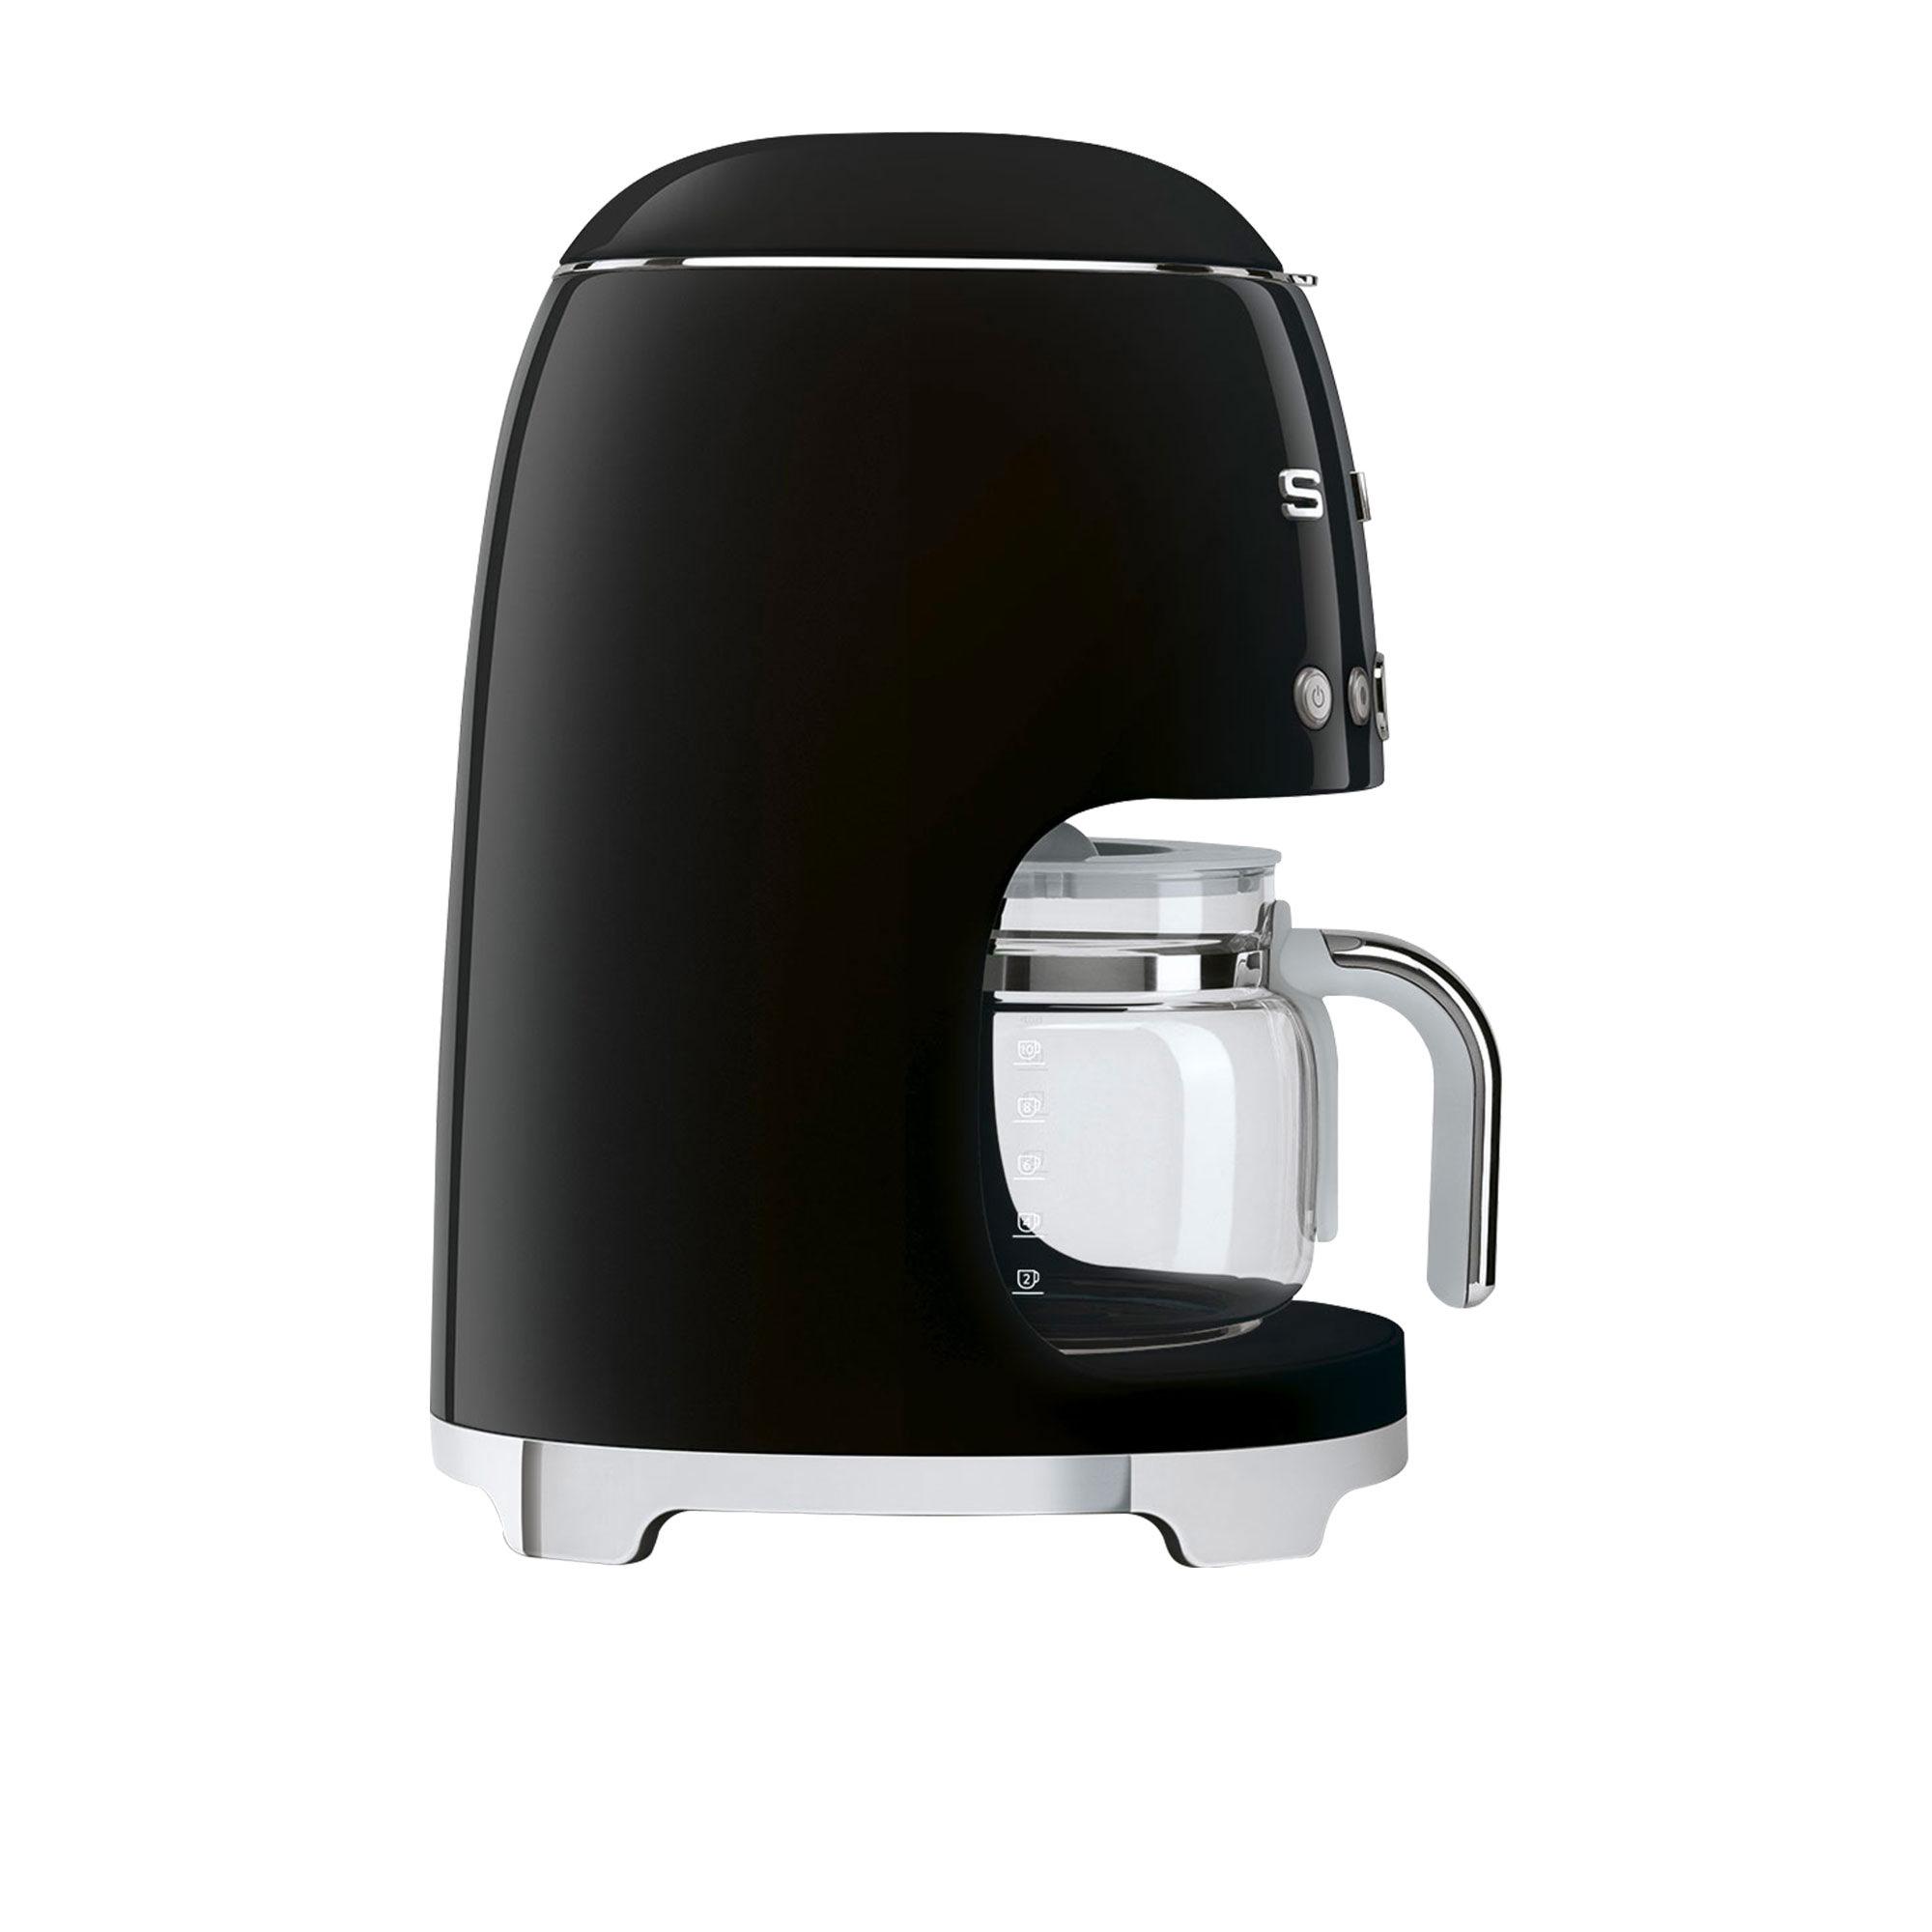 Smeg 50's Retro Style Drip Filter Coffee Machine Black Image 4